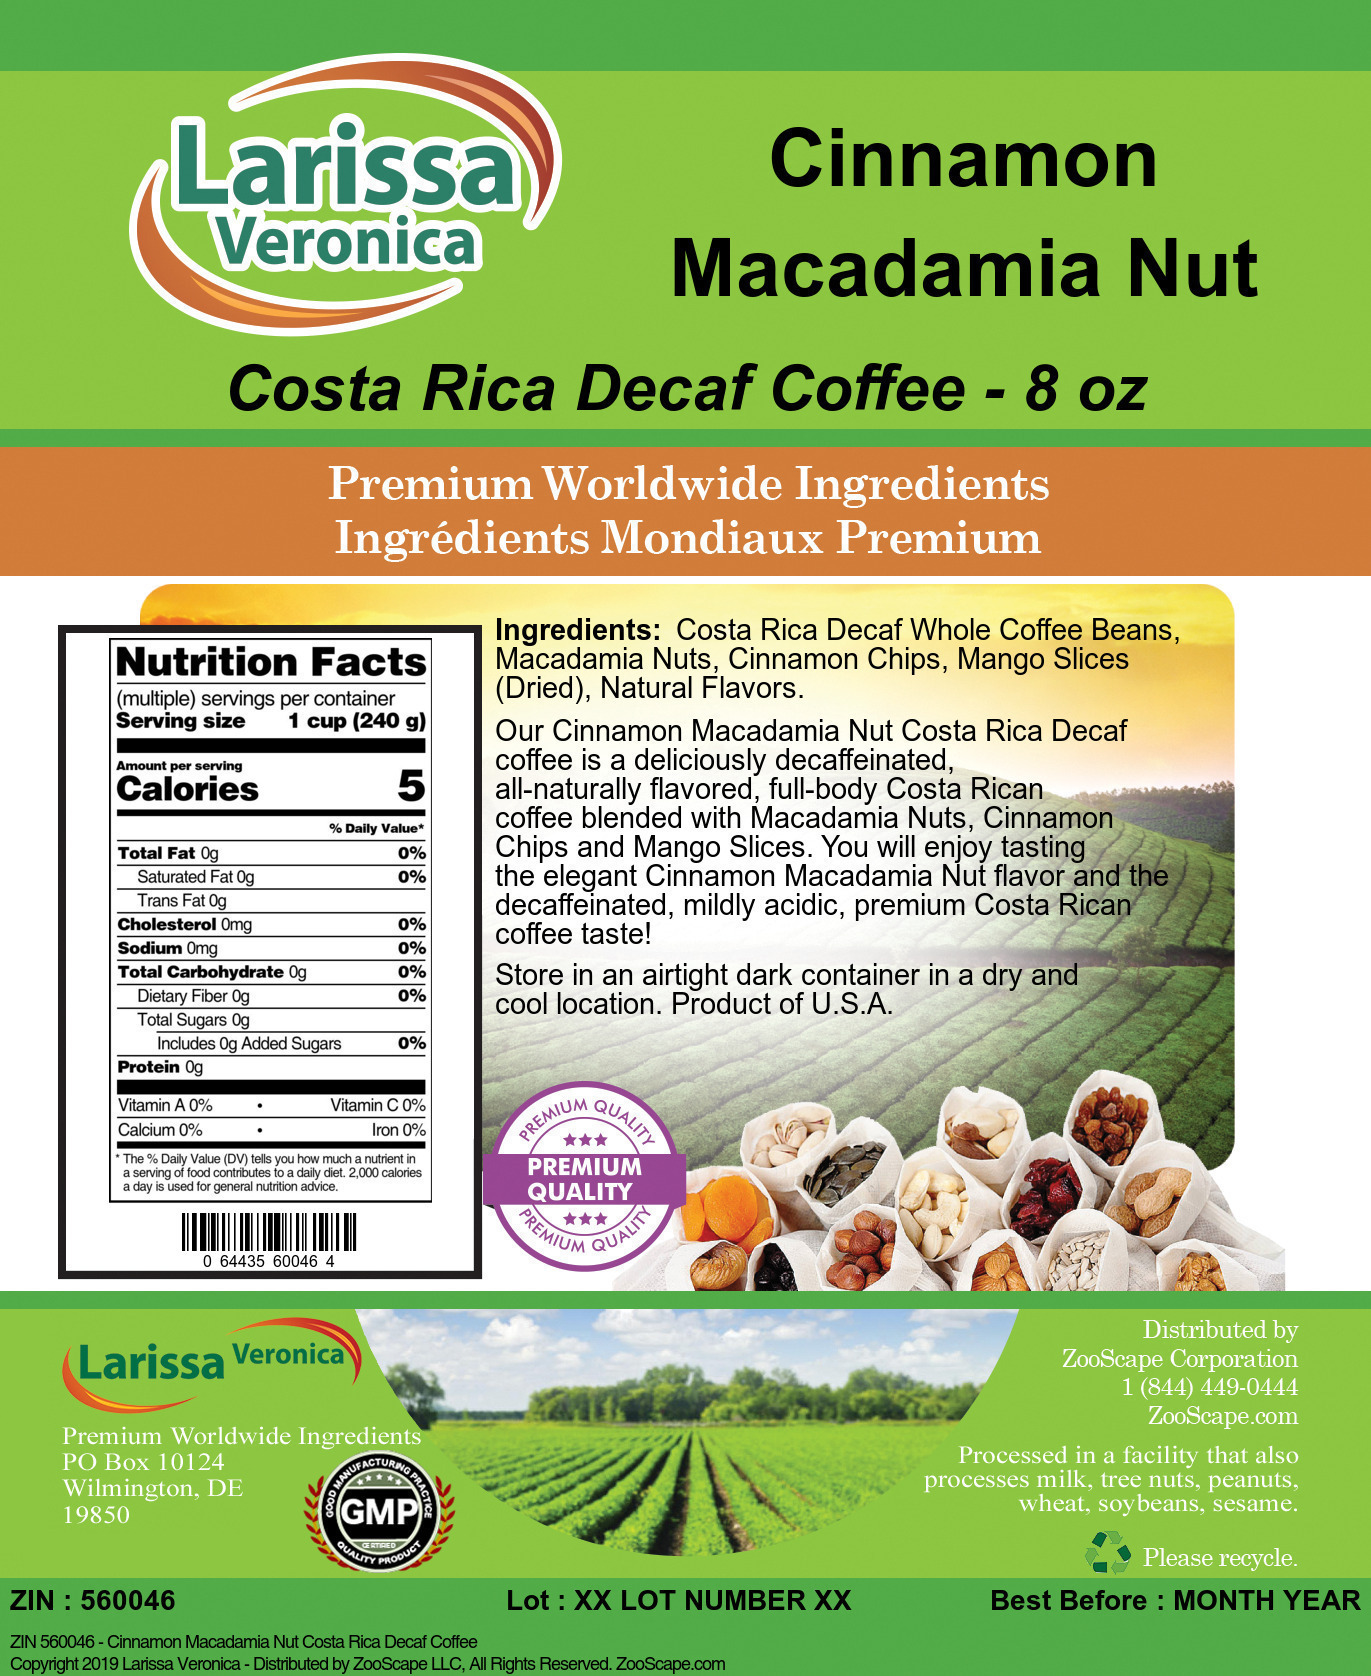 Cinnamon Macadamia Nut Costa Rica Decaf Coffee - Label